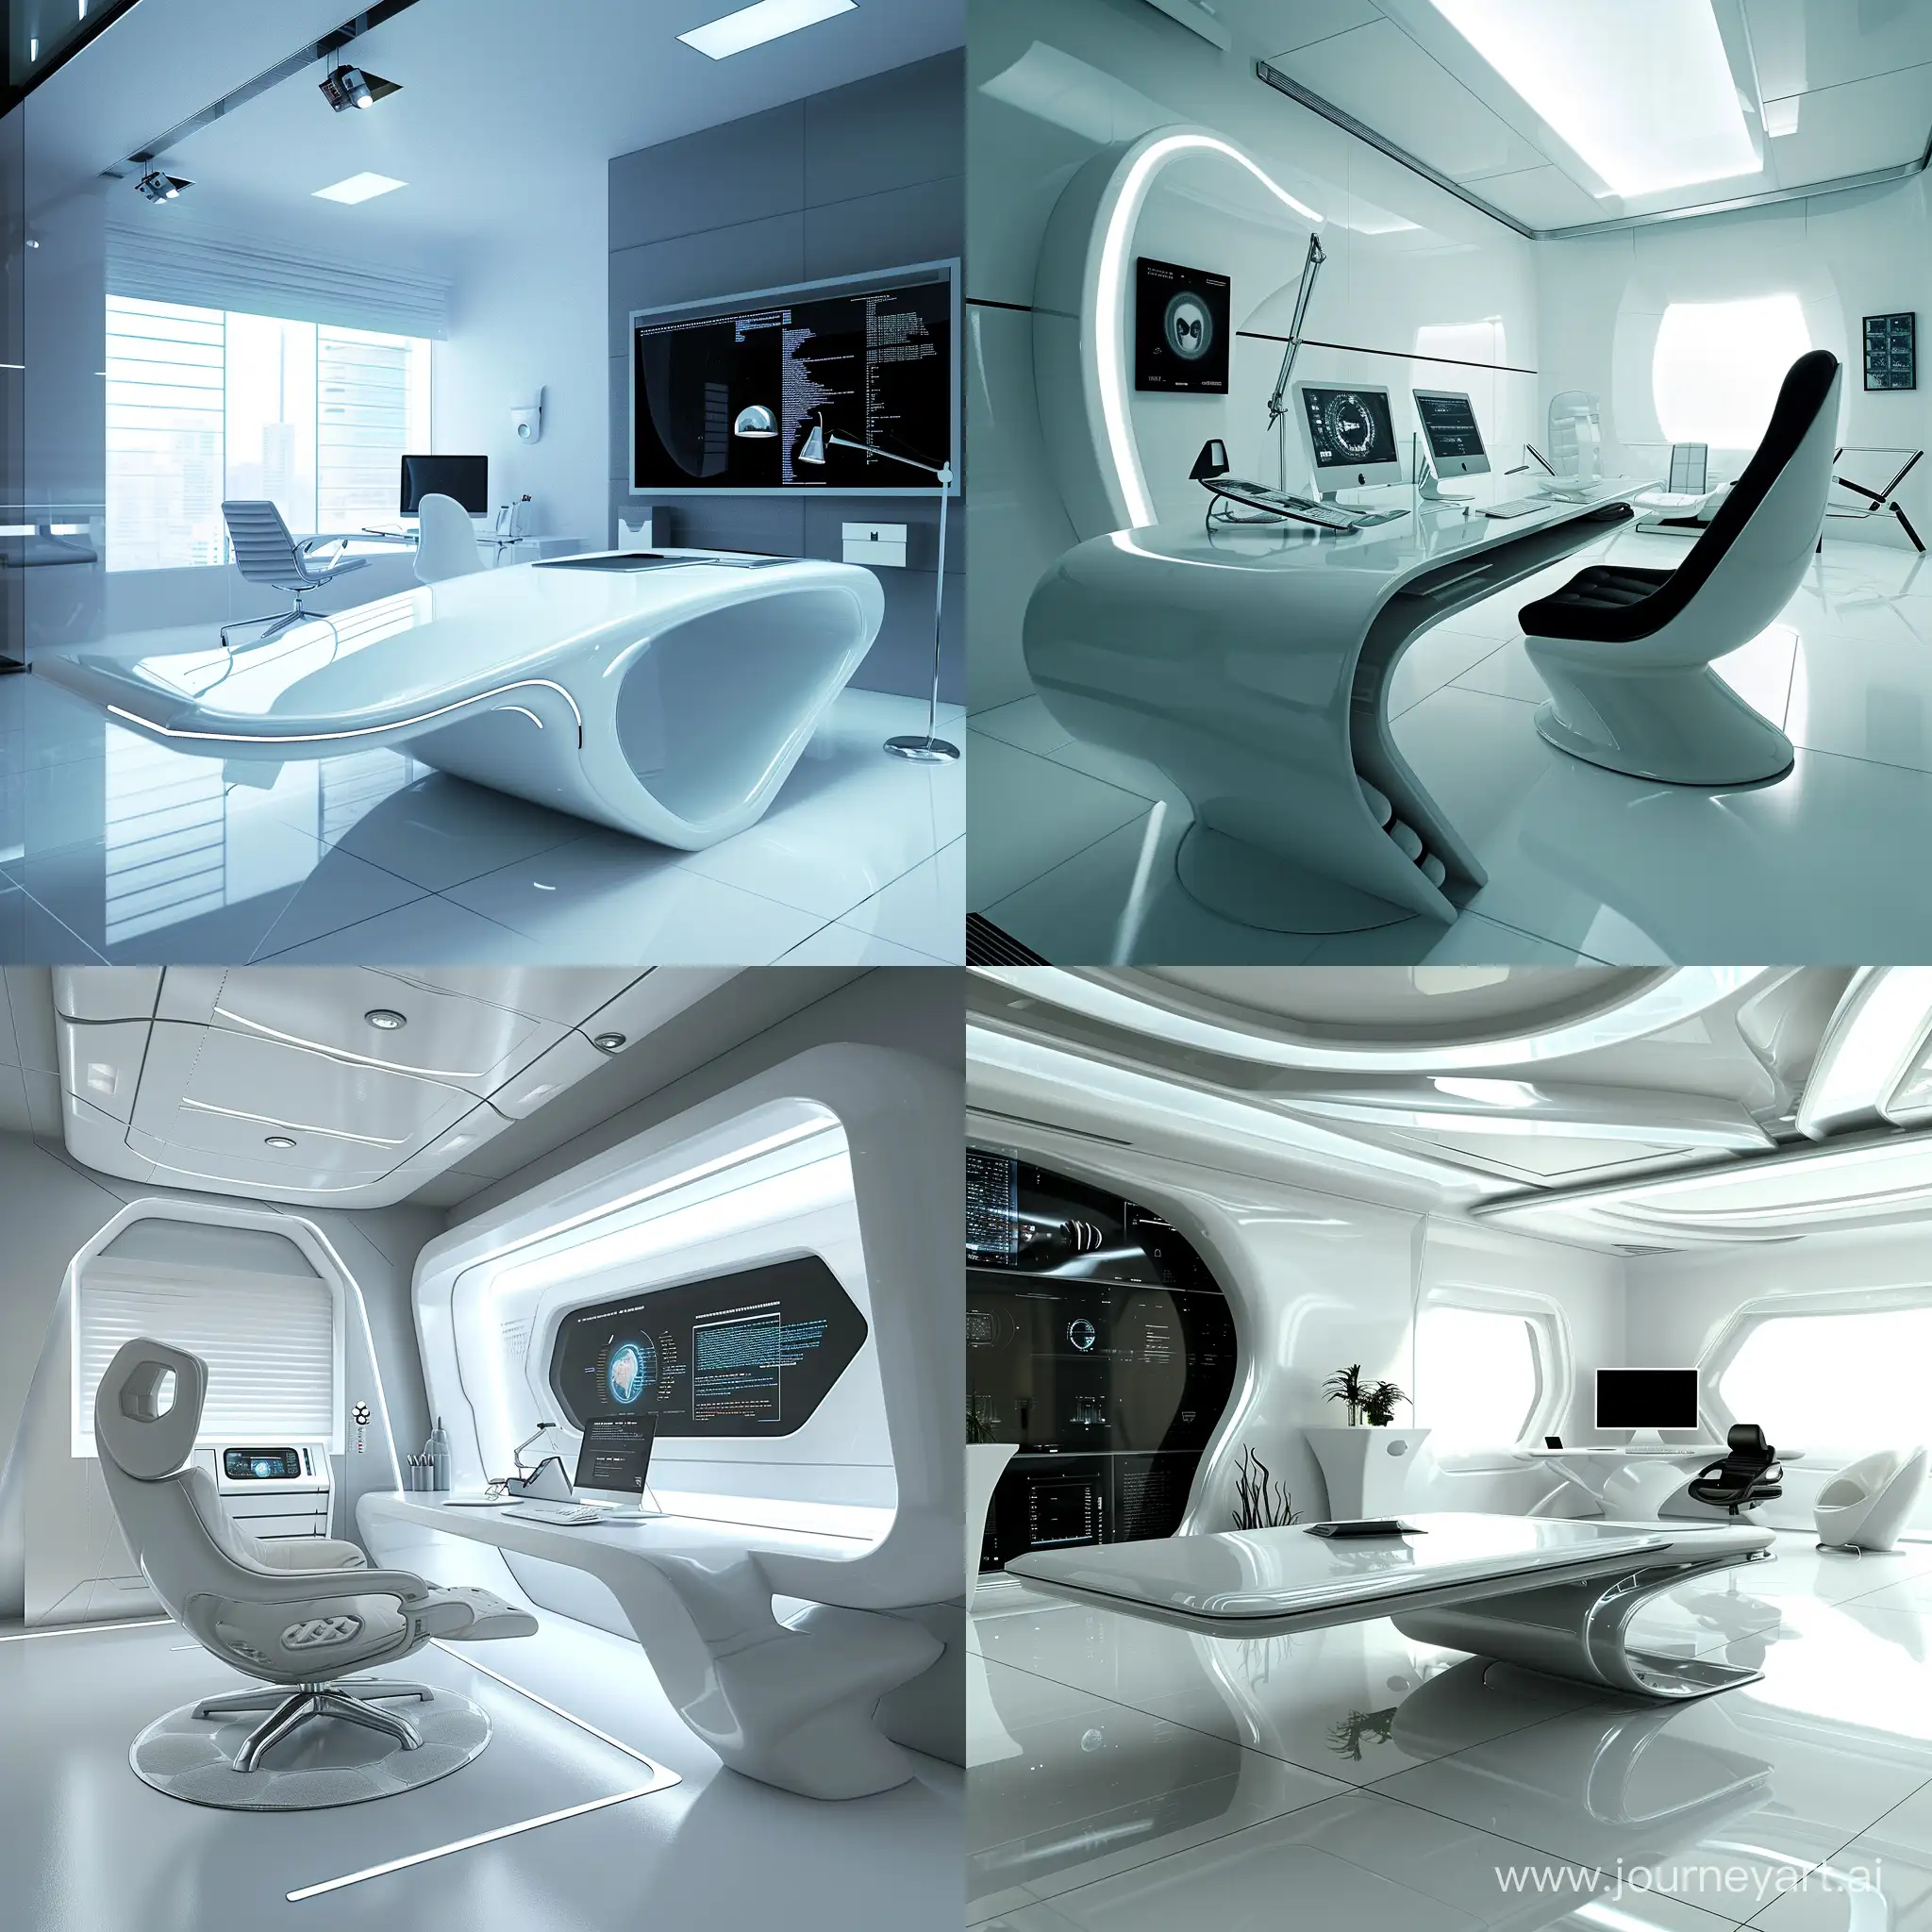 Futuristic-Minimalist-Home-Office-with-Sleek-Furniture-and-StateoftheArt-Technology